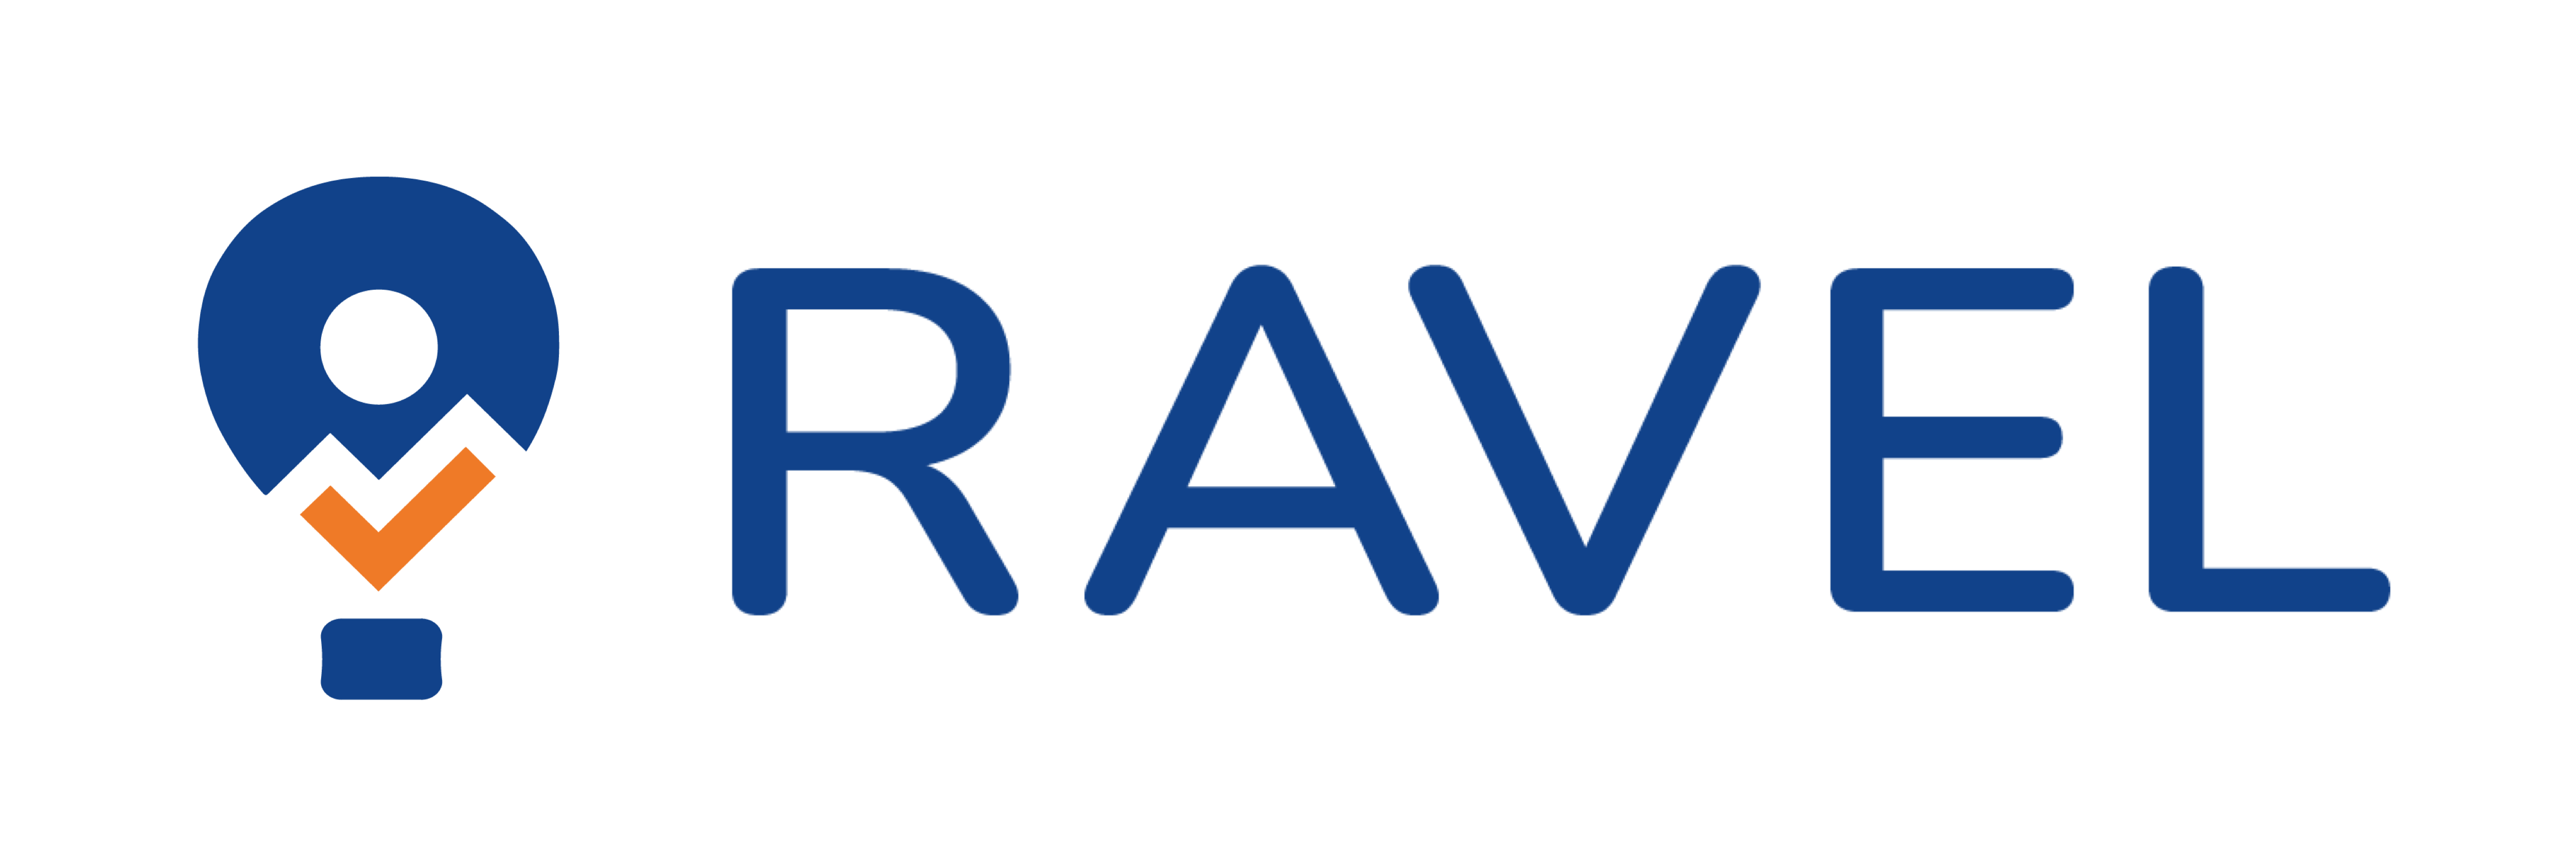 Ravel logo